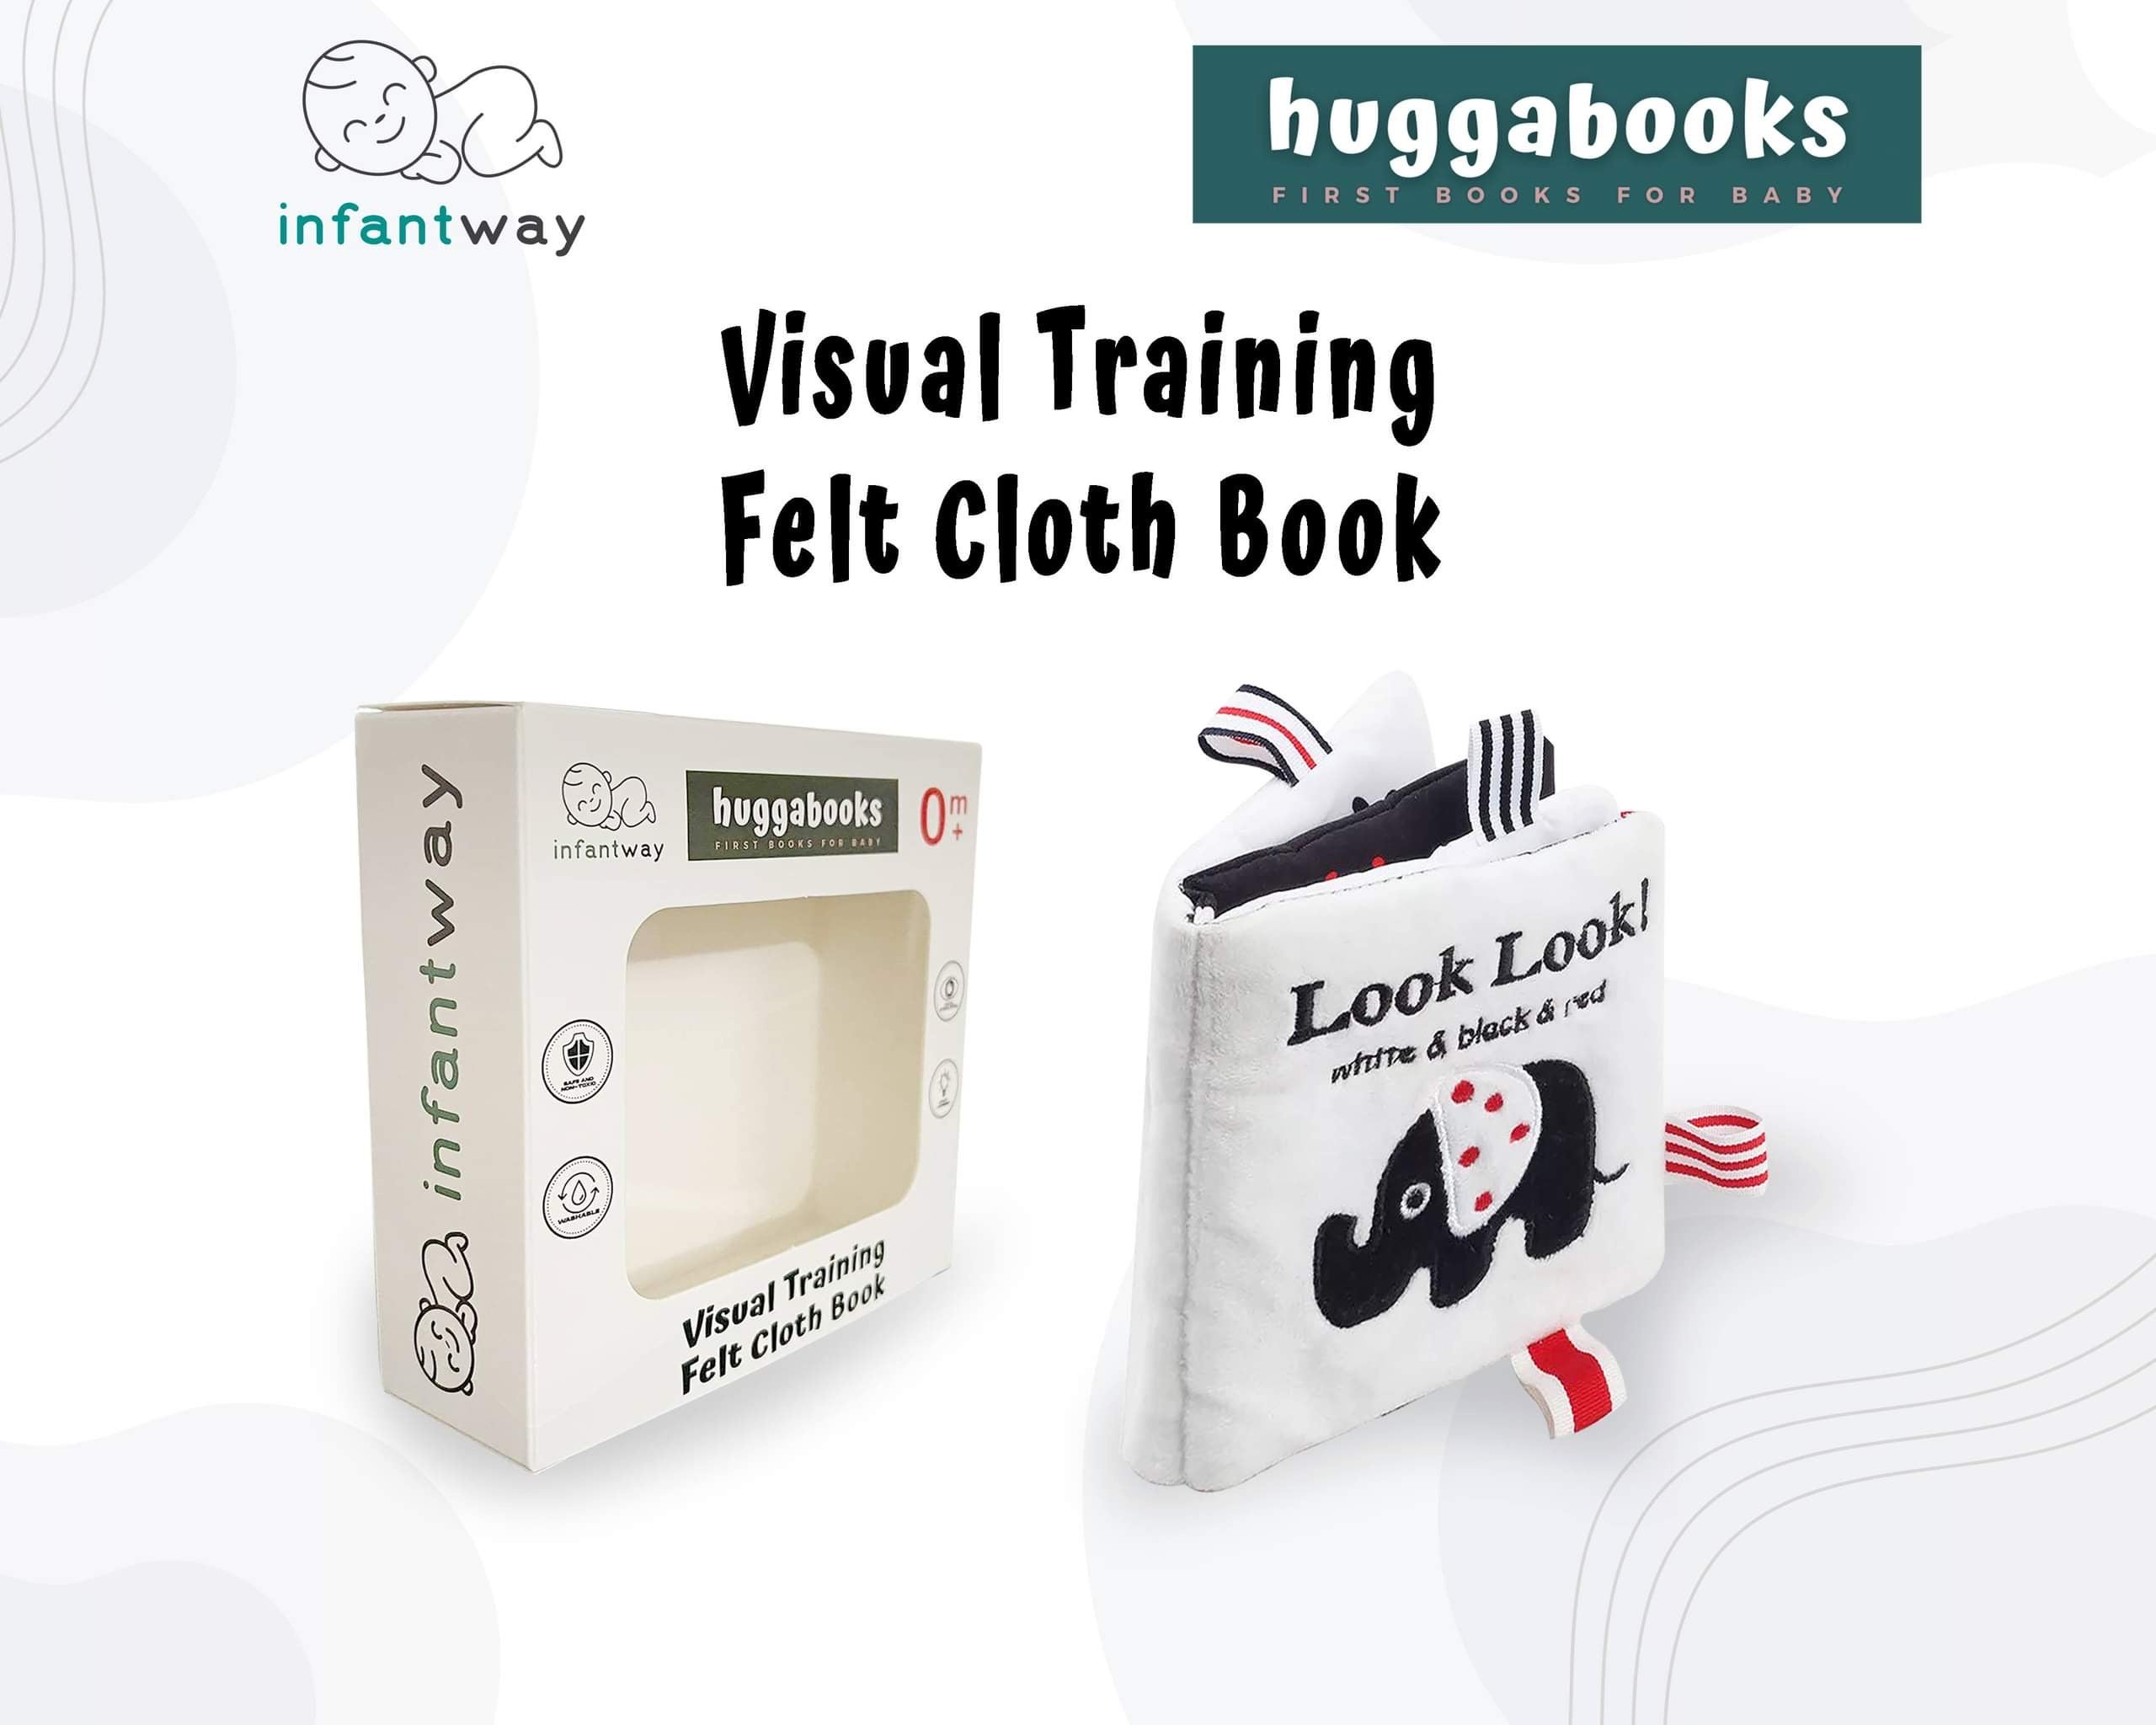 Infantway Huggabooks Visual Training Felt Cloth Book